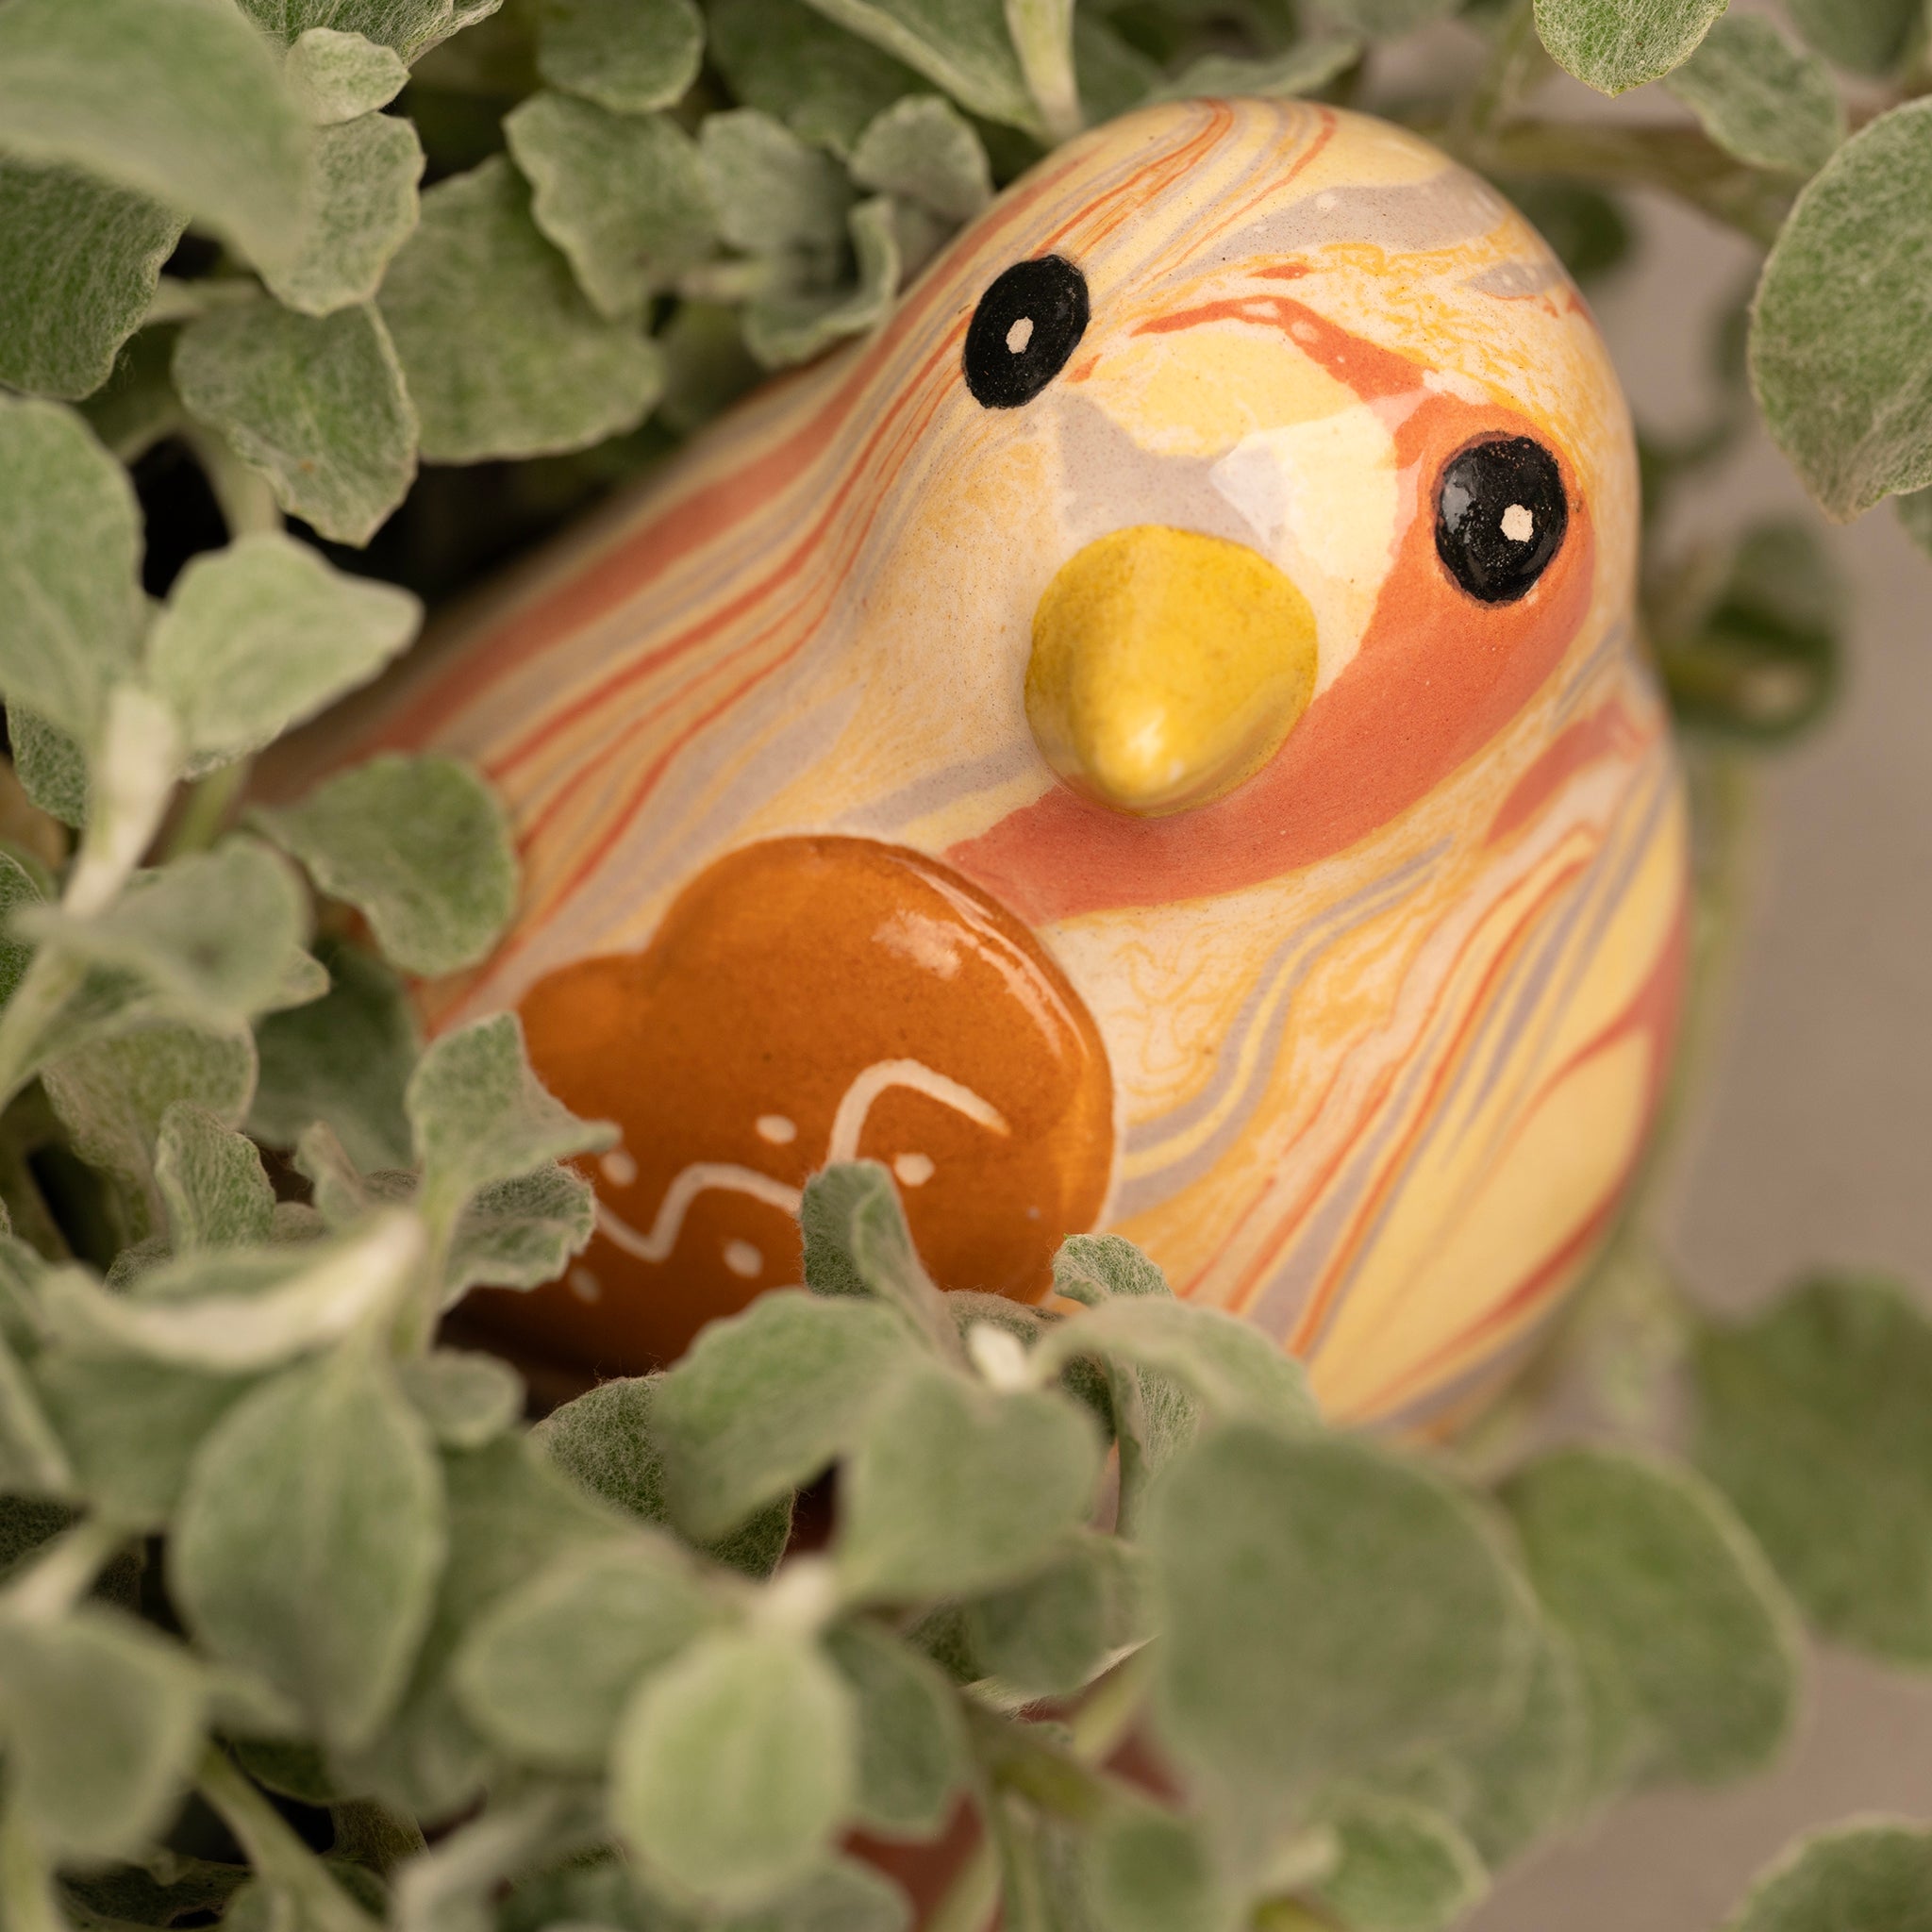 Bird - Swirled Ceramic Pot Hugger